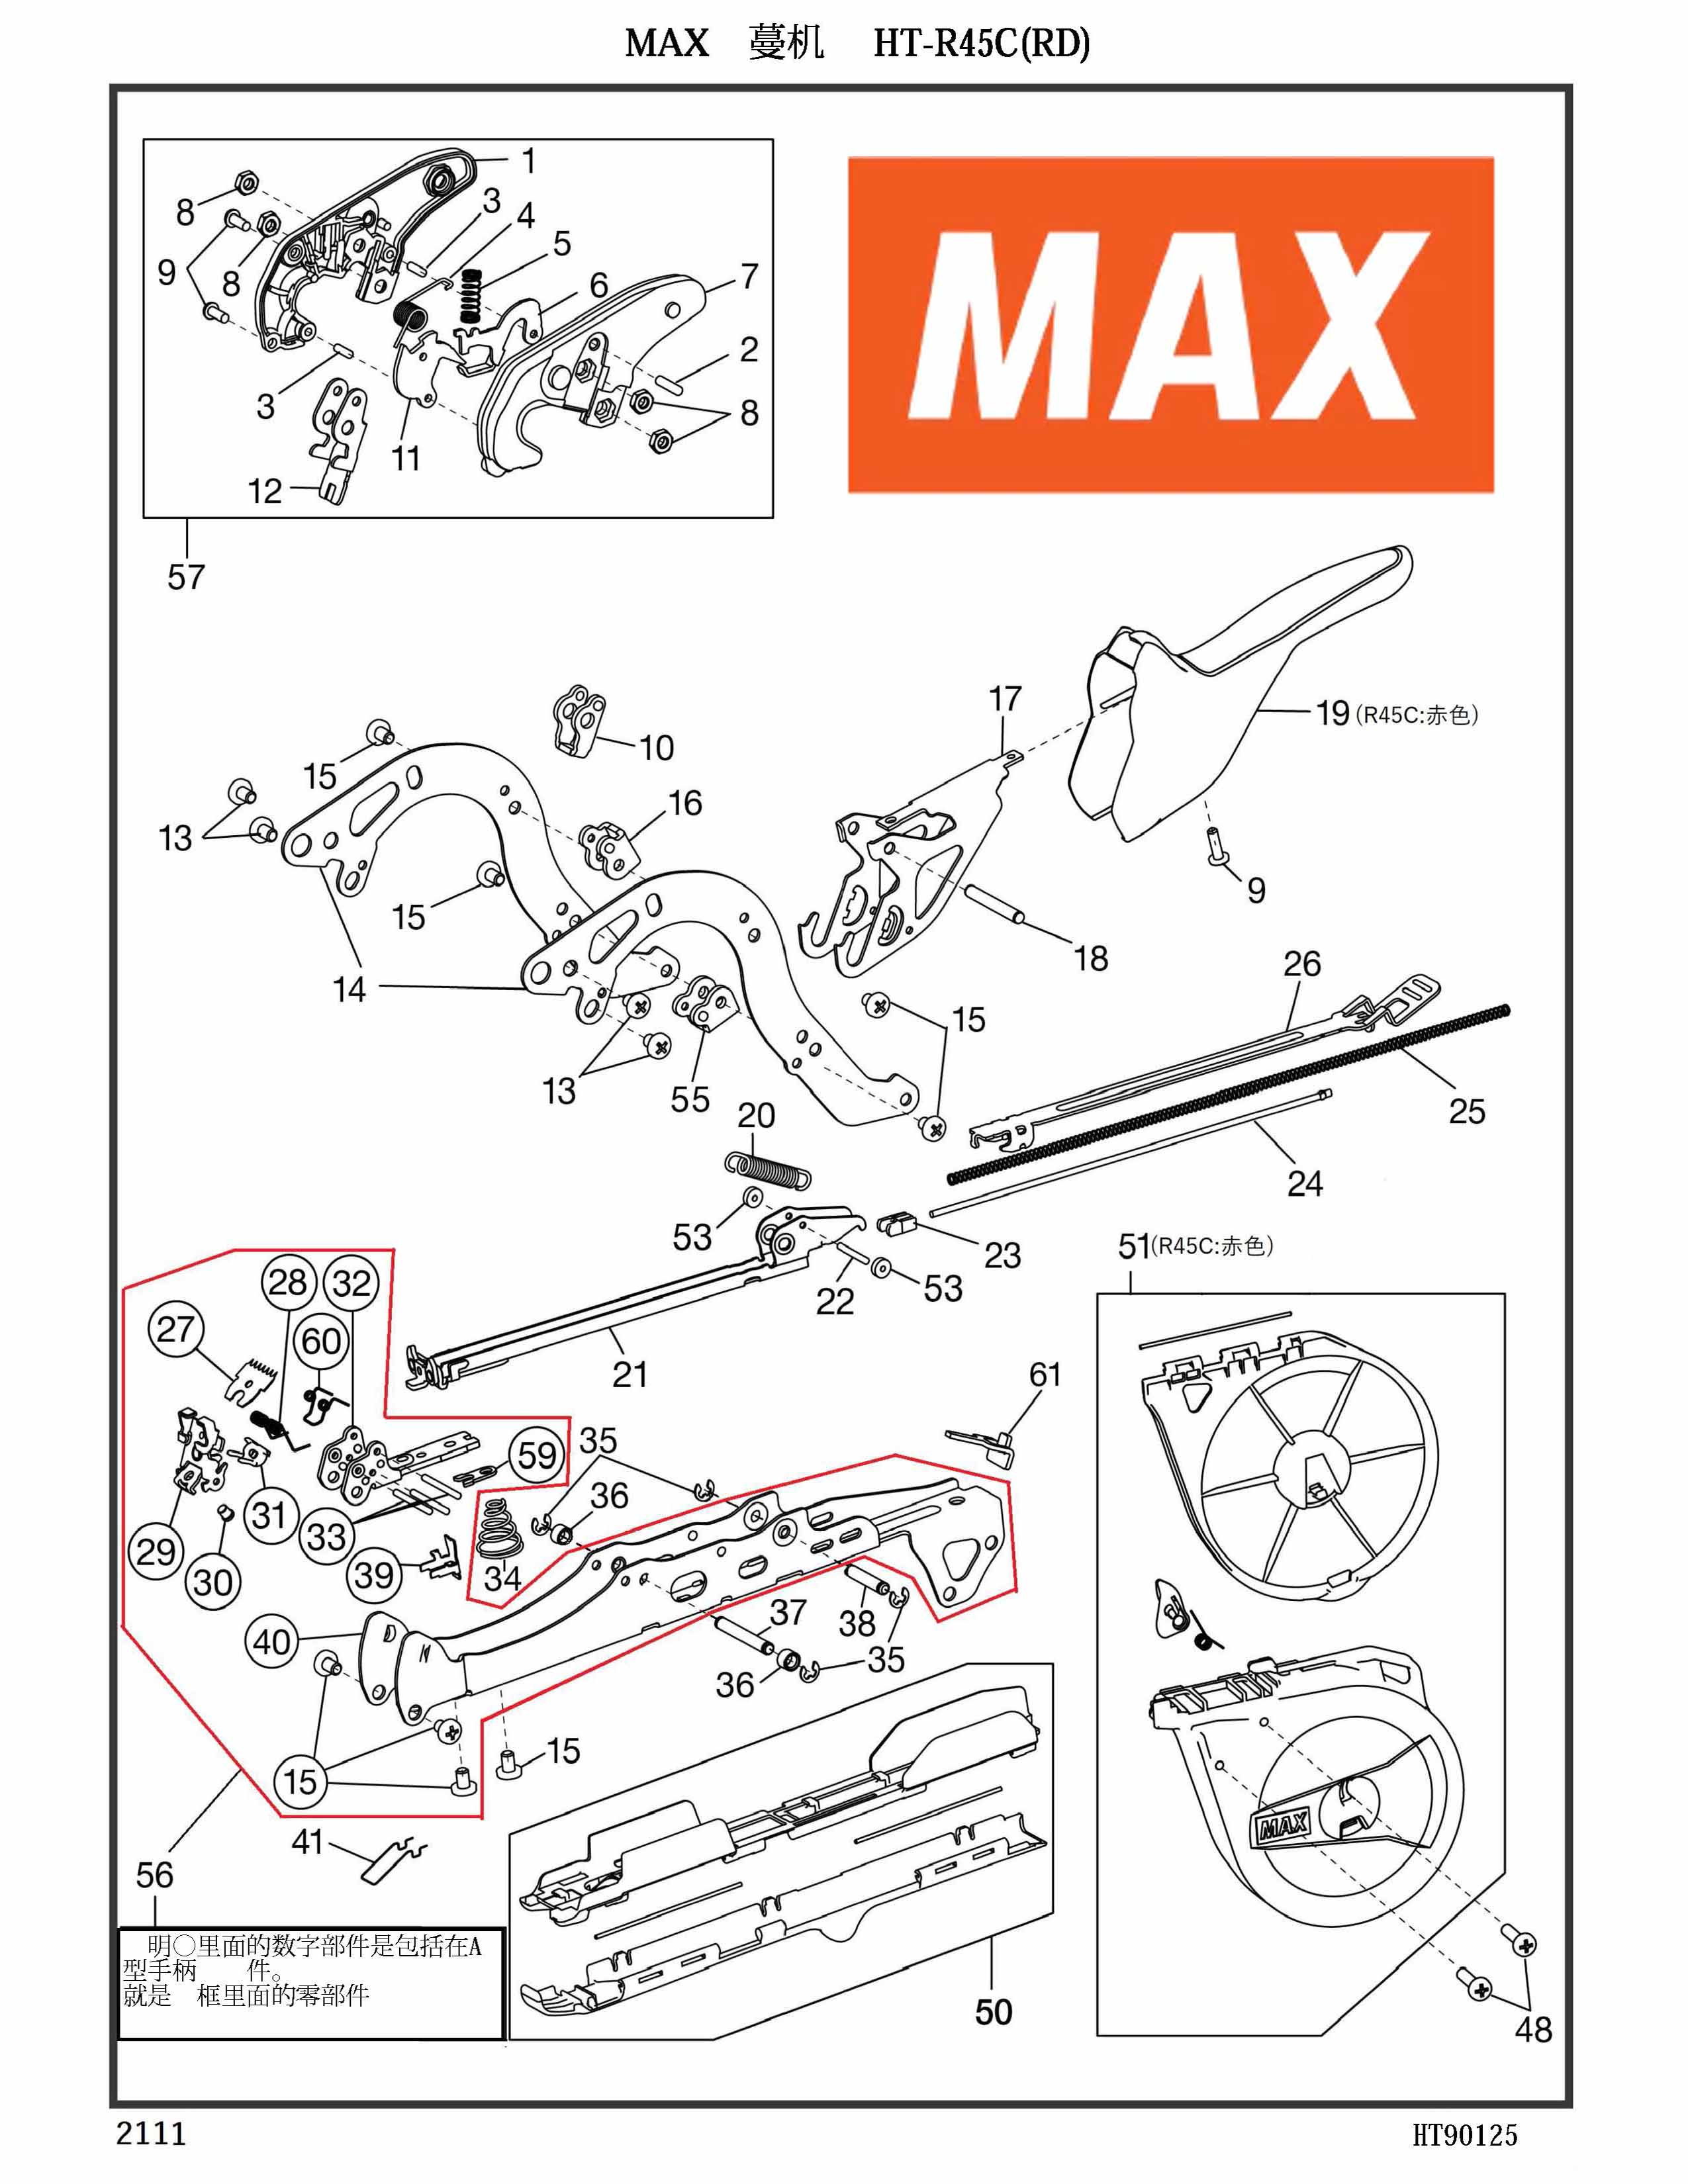 MAX Tapener Part FF31712 STRAIGHT PIN 1712(HT-R) Fits MAX HT-R45L(O) R45C(RD) HT-R1 HT-R2 #3